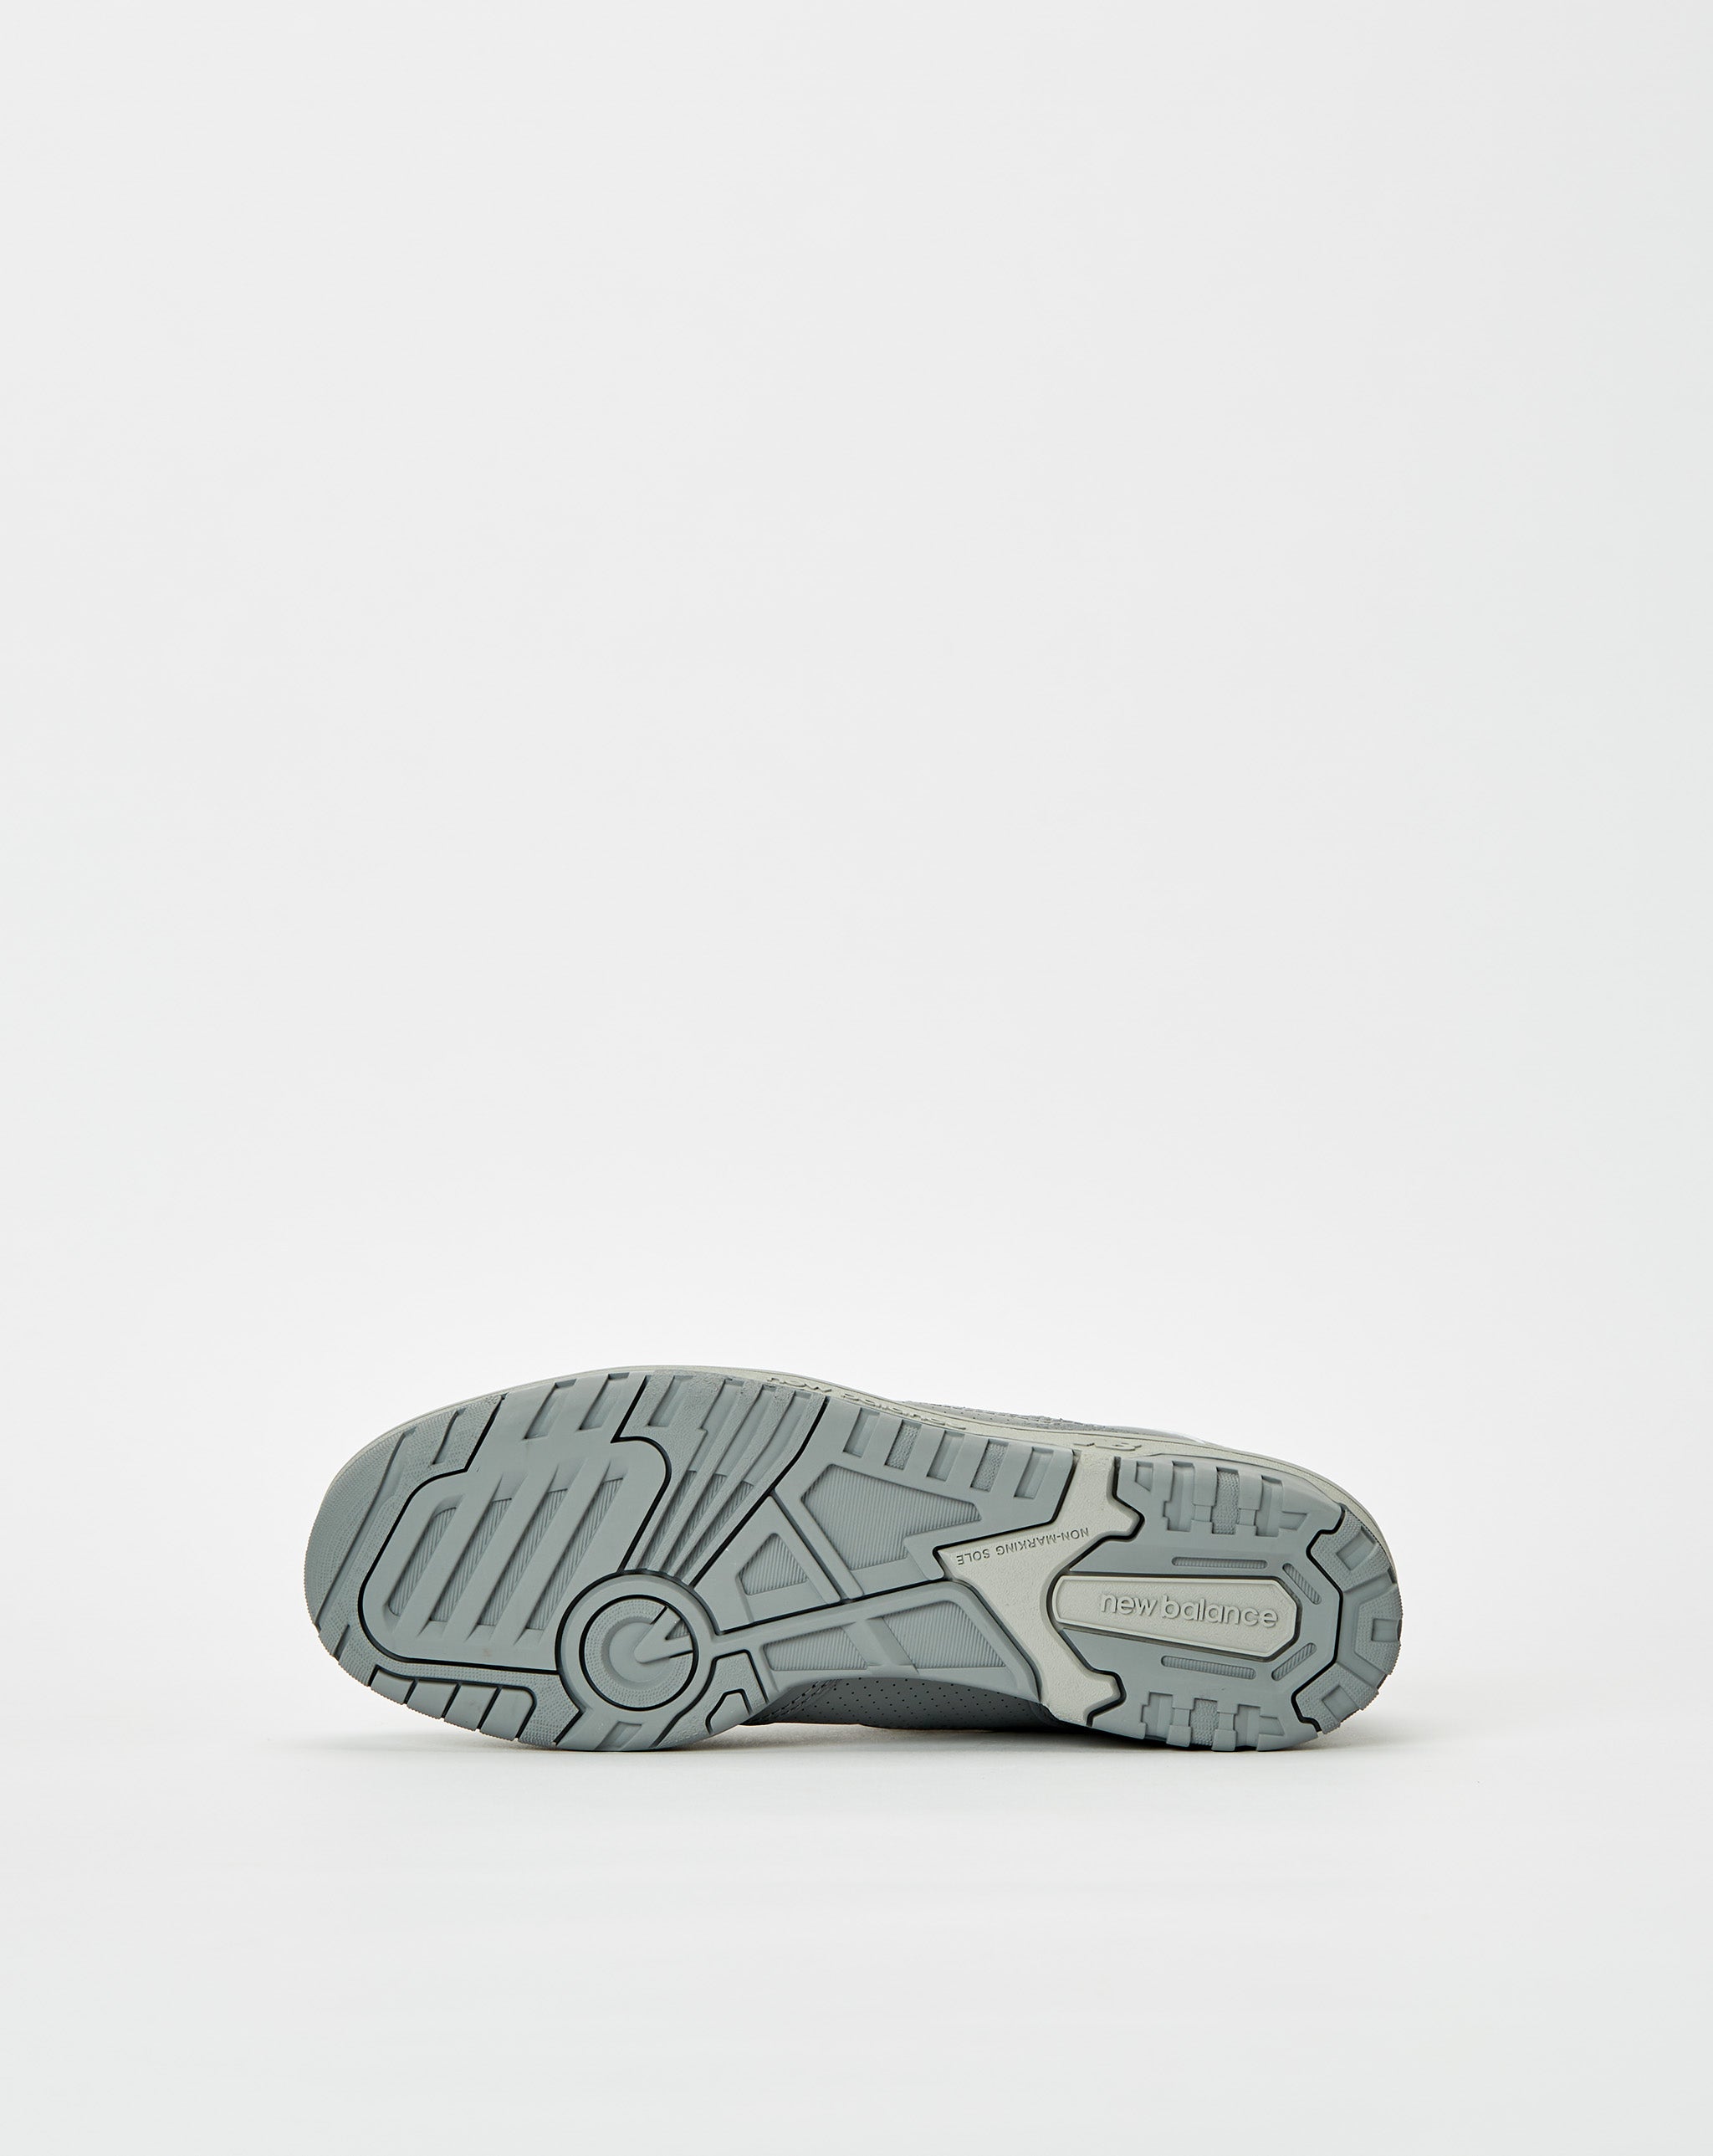 Adidas Yeezy Boost 750 x MattB Custom Summer Sneaker in Camouflage UVP £ 1500